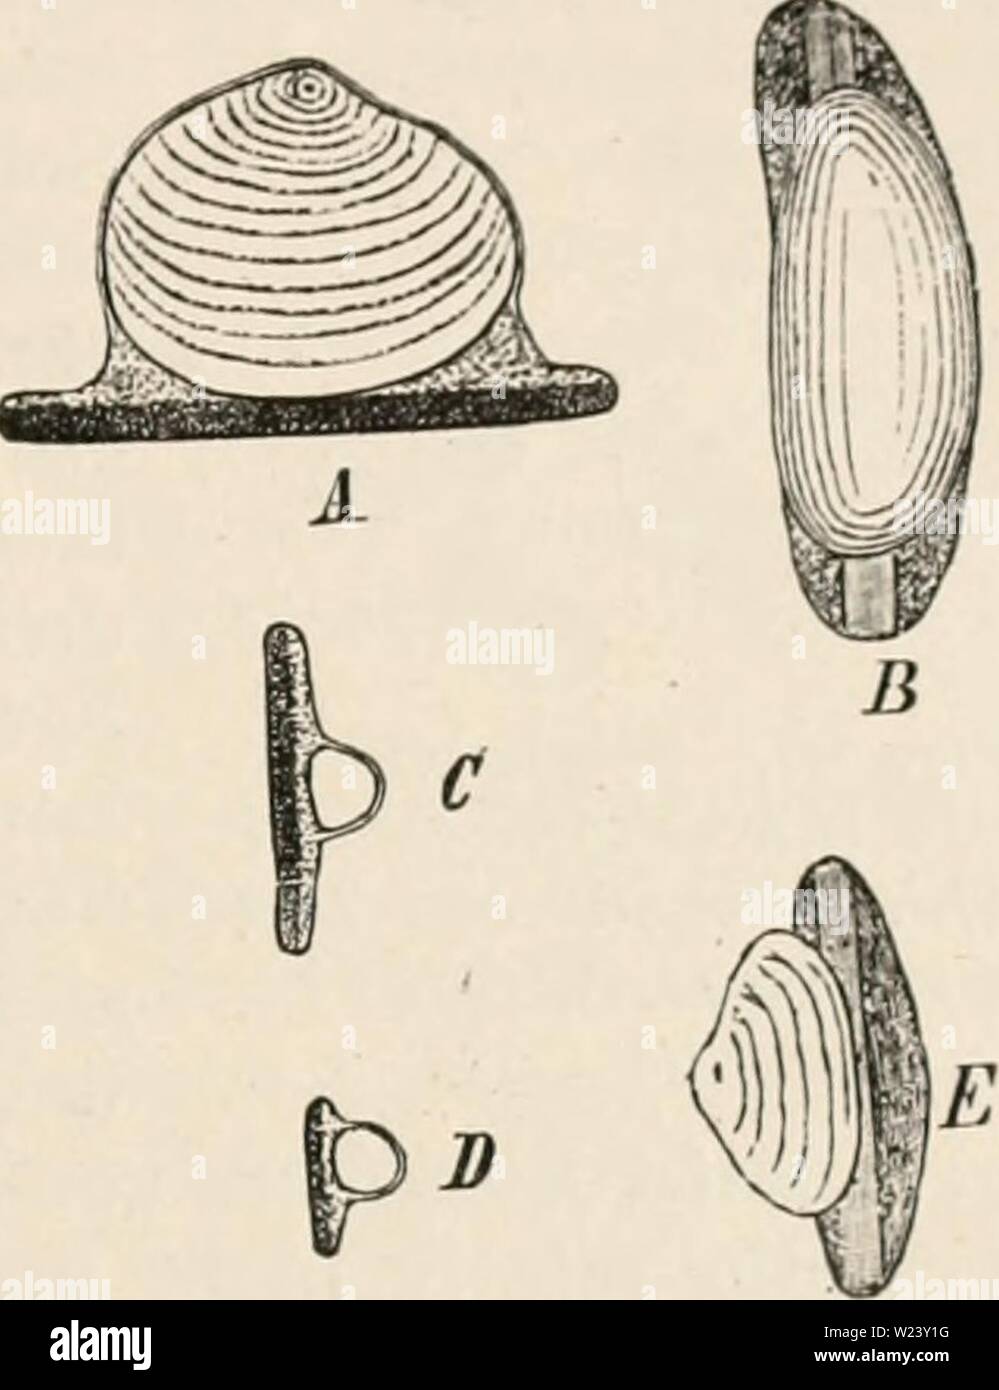 Immagine di archivio da pagina 190 di Das botanische praktikum, Anleitung zum Foto Stock